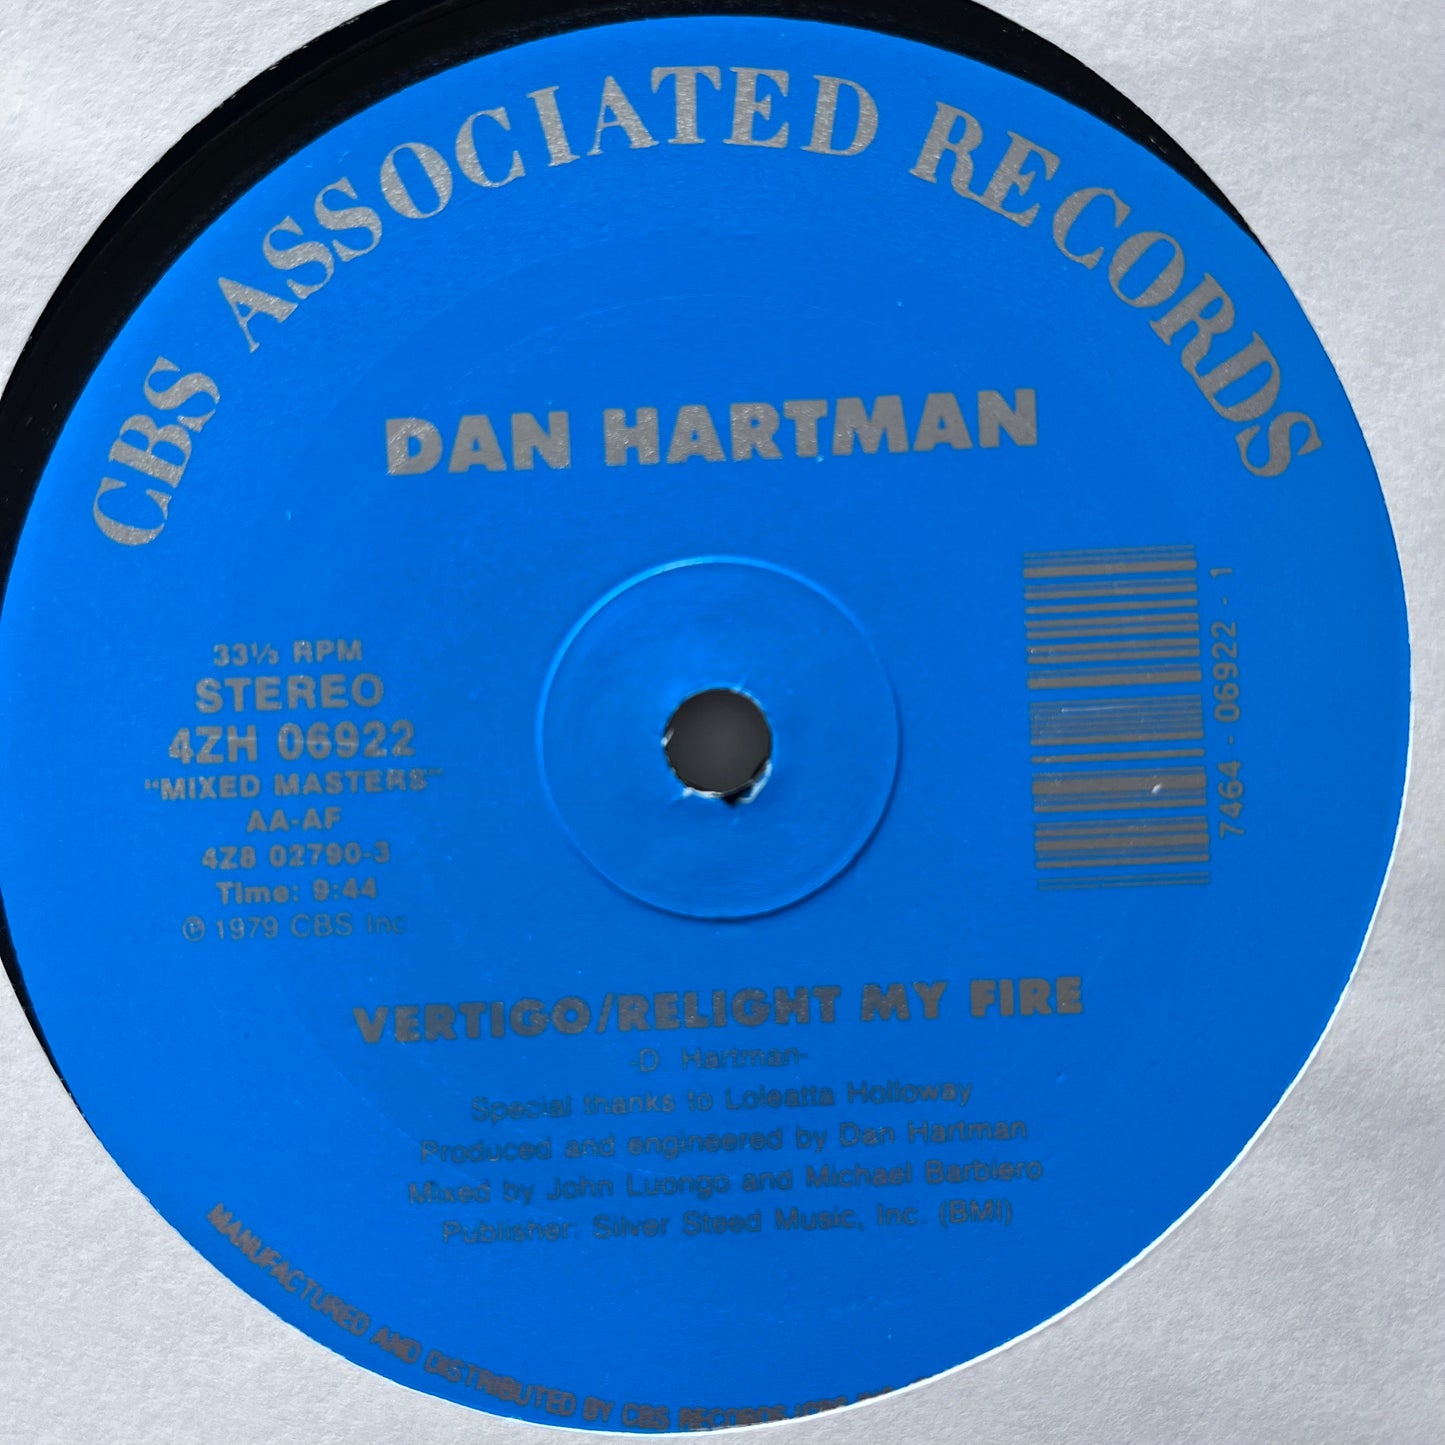 Dan Hartman “Instant Reply” / “Relight My Fire” 3 Track 12inch Vinyl Record